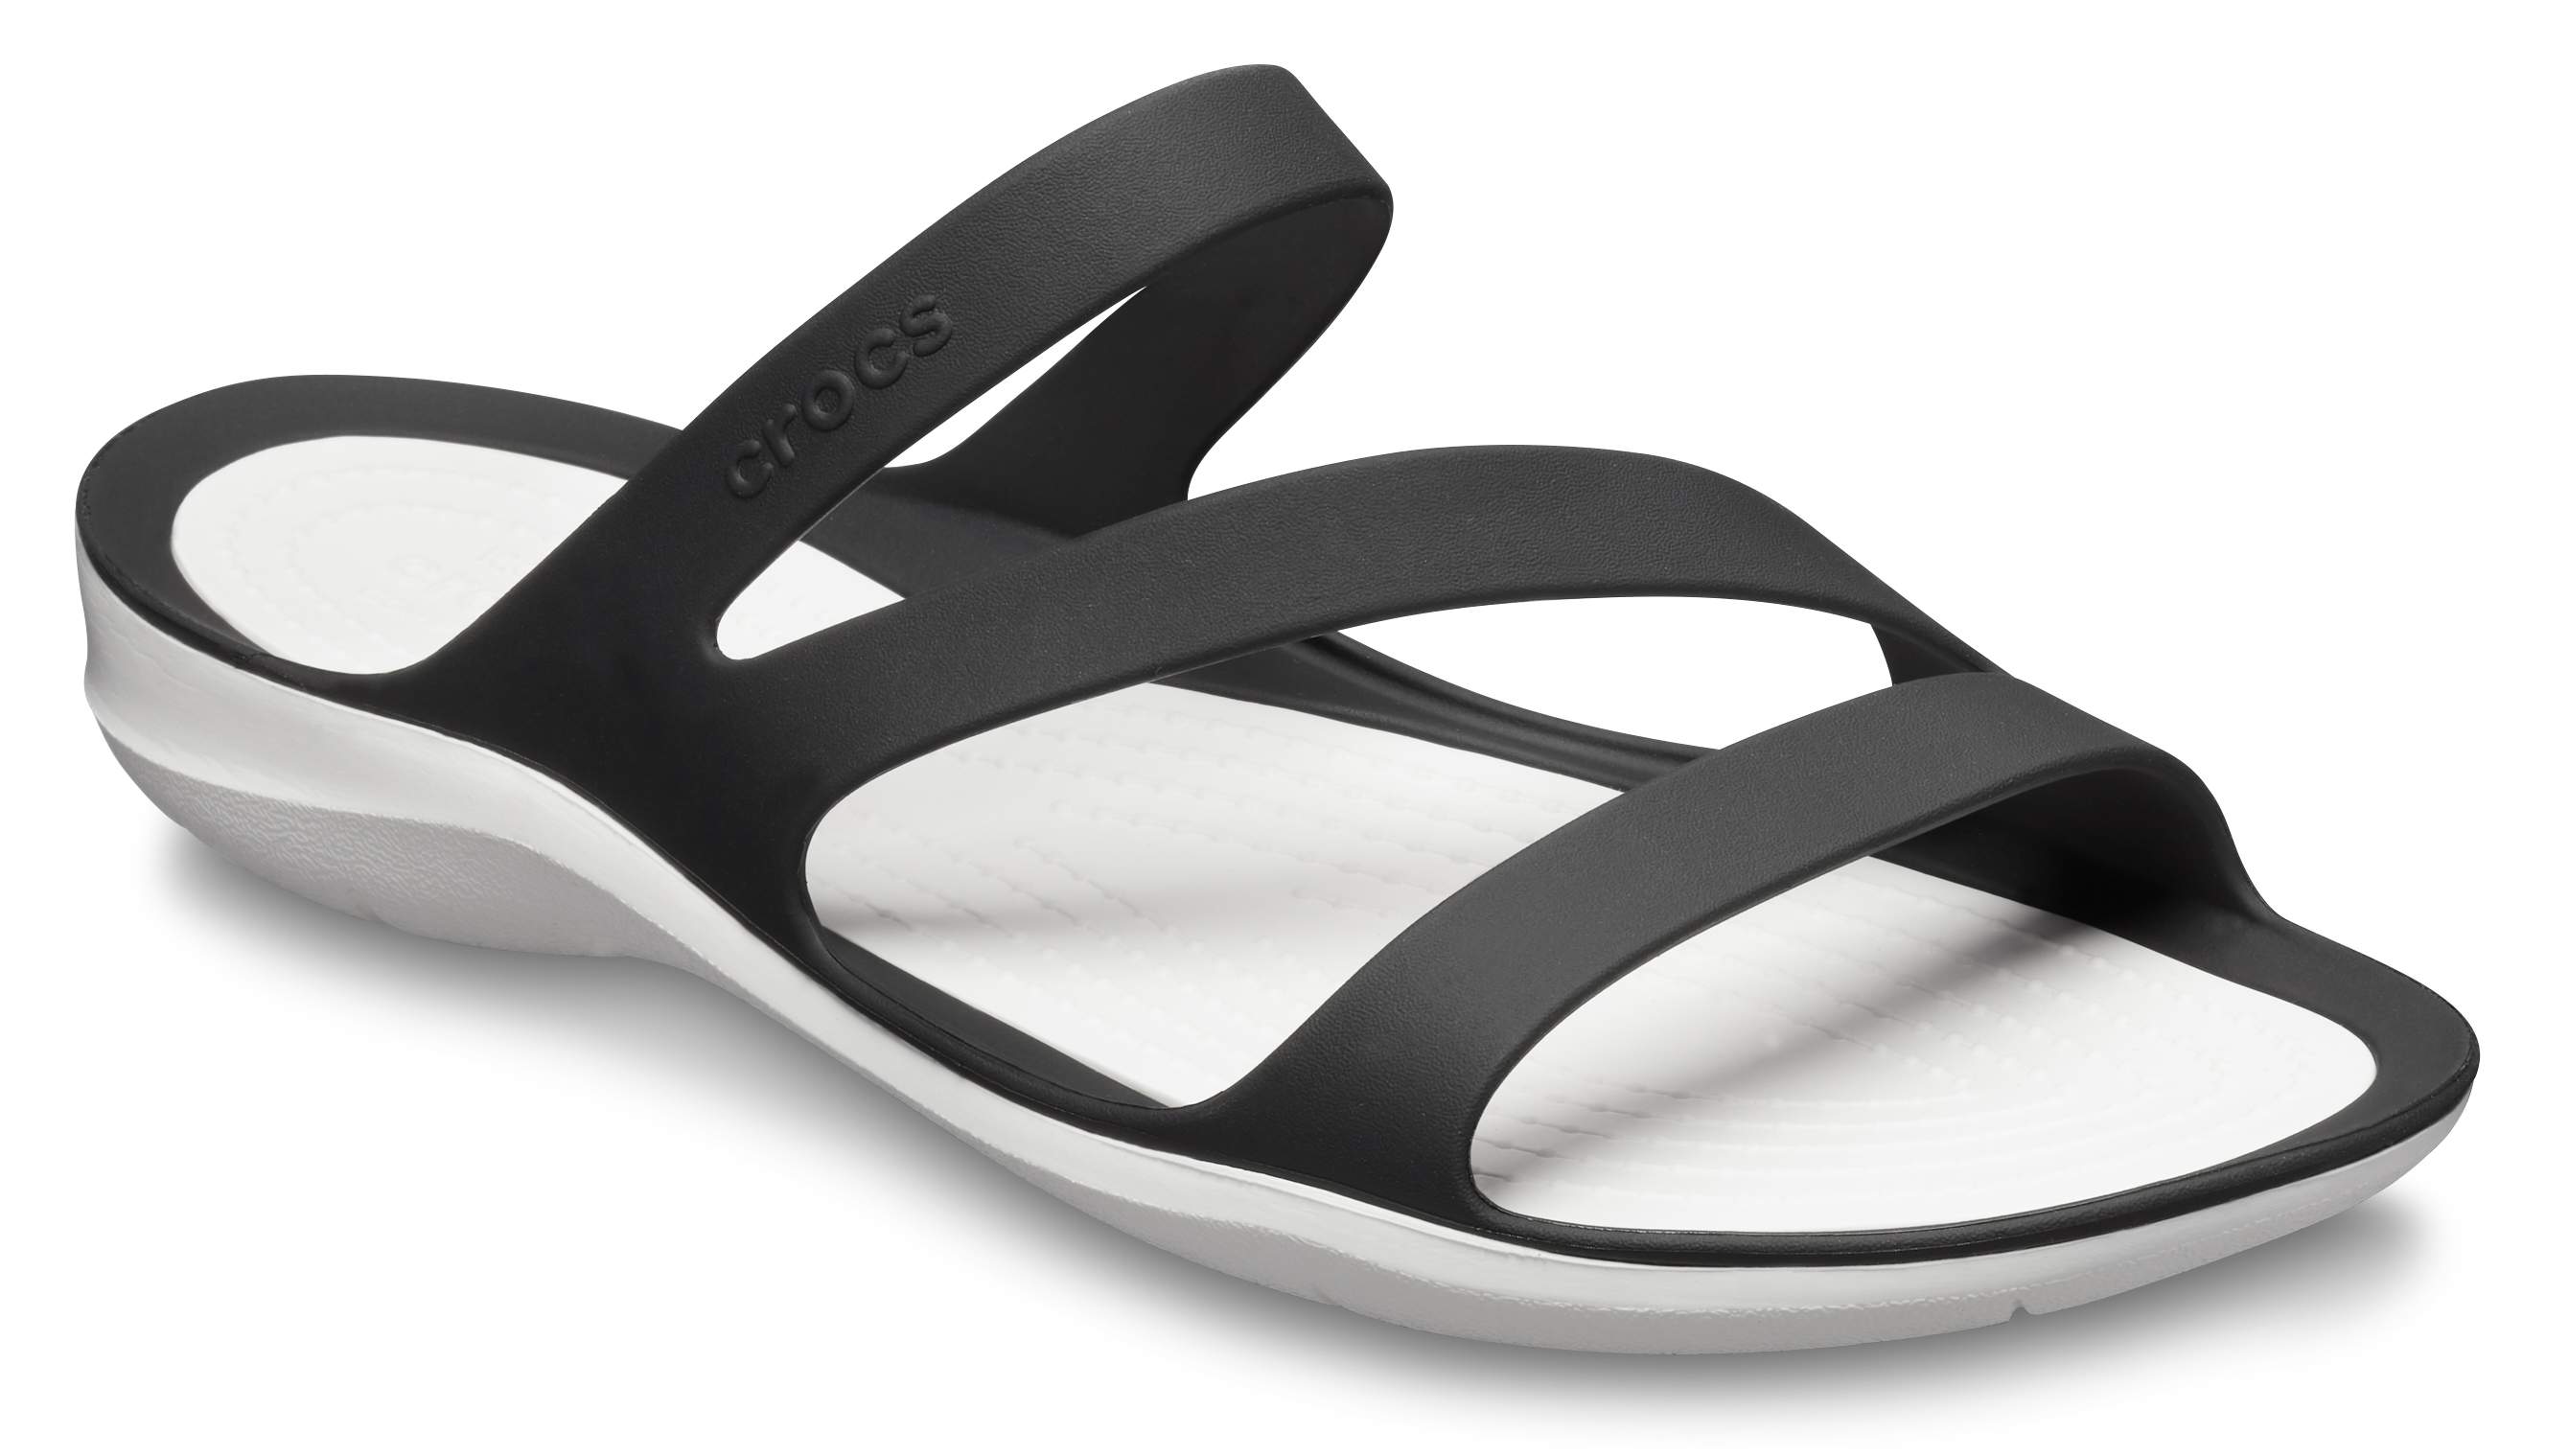 crocs women's swiftwater sandal black